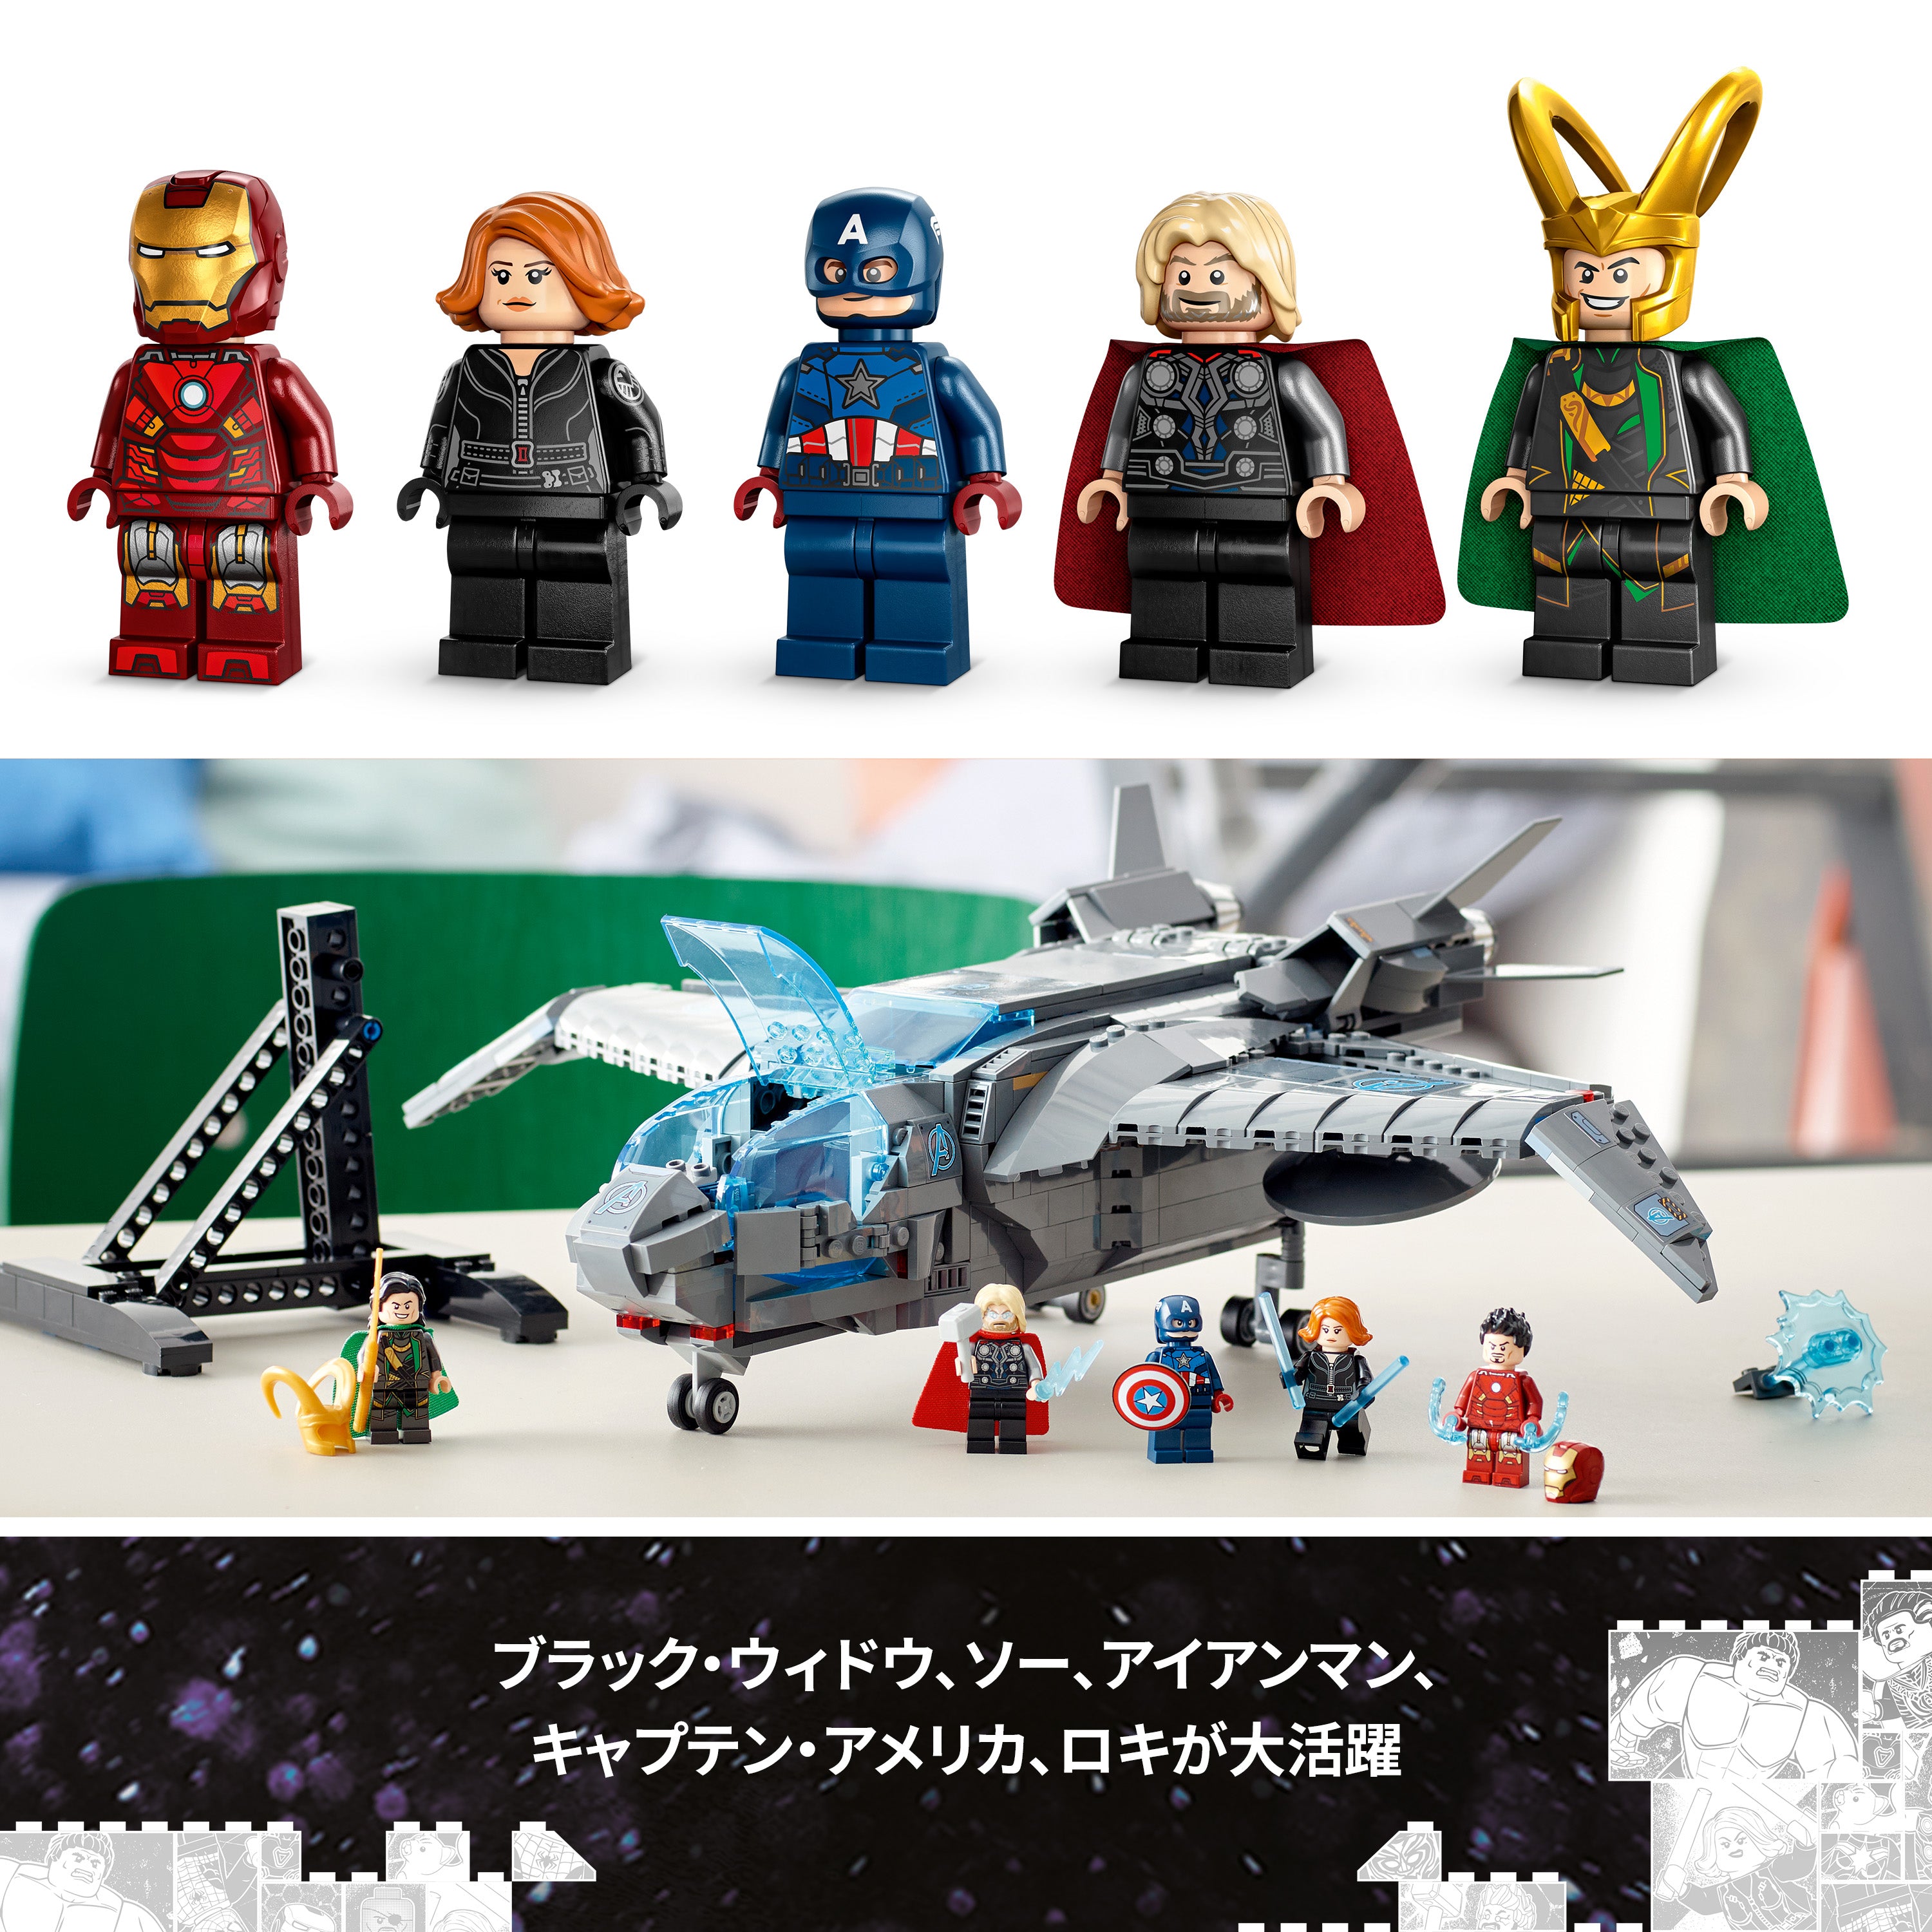 Lego 76248 The Avengers Quinjet